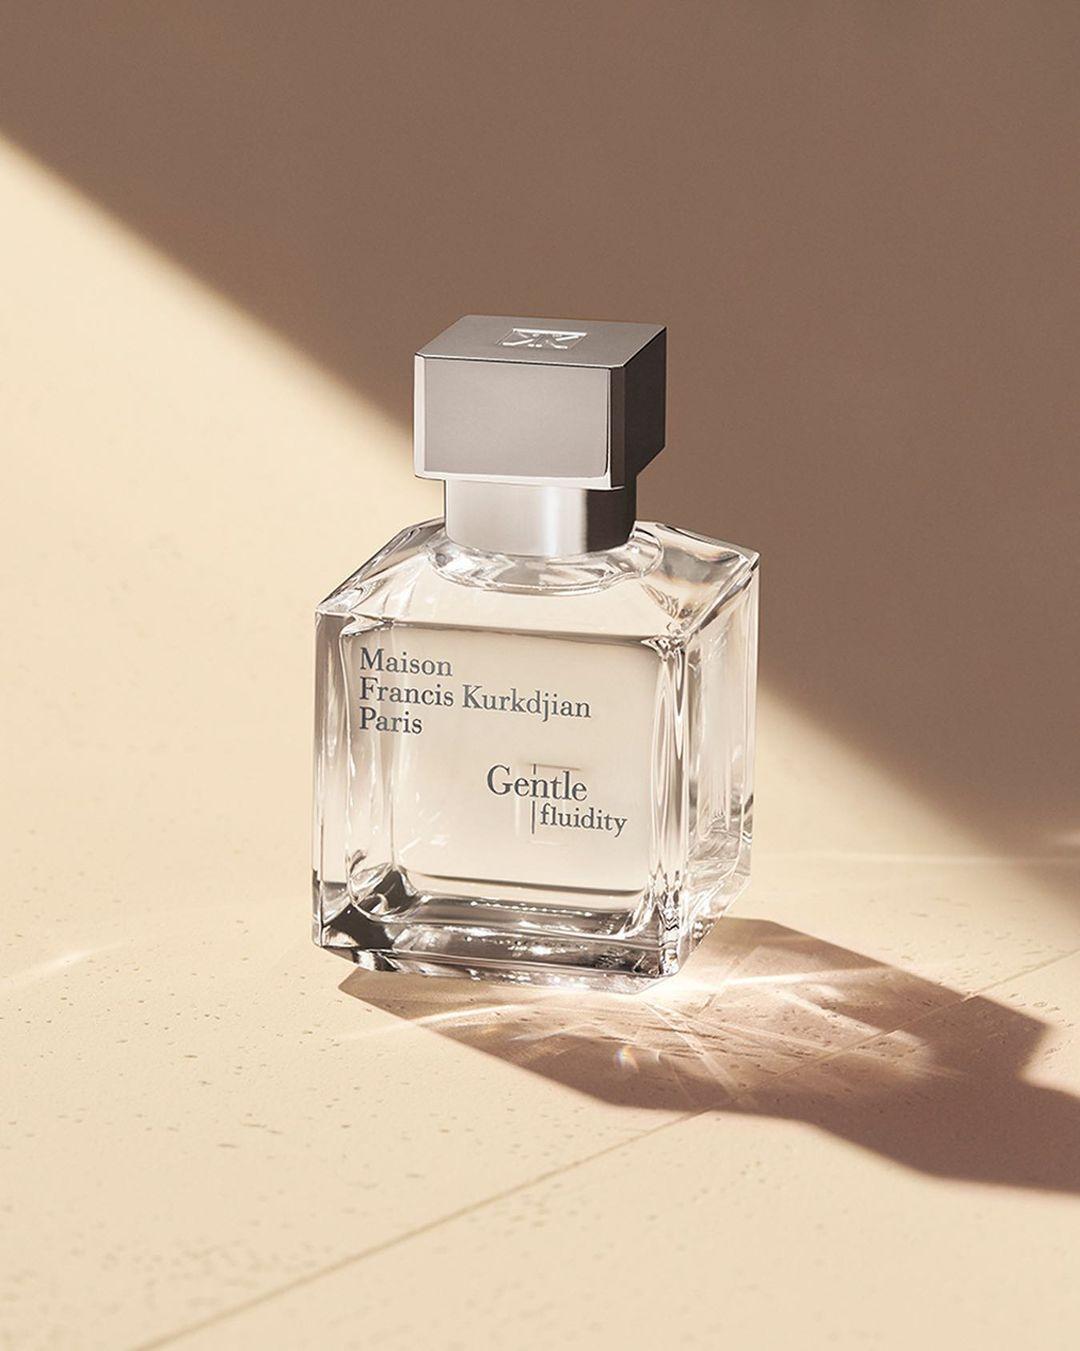 Maison Francis Kurkdjian - Gentle fluidity silver 70 ml | Perfume Lounge